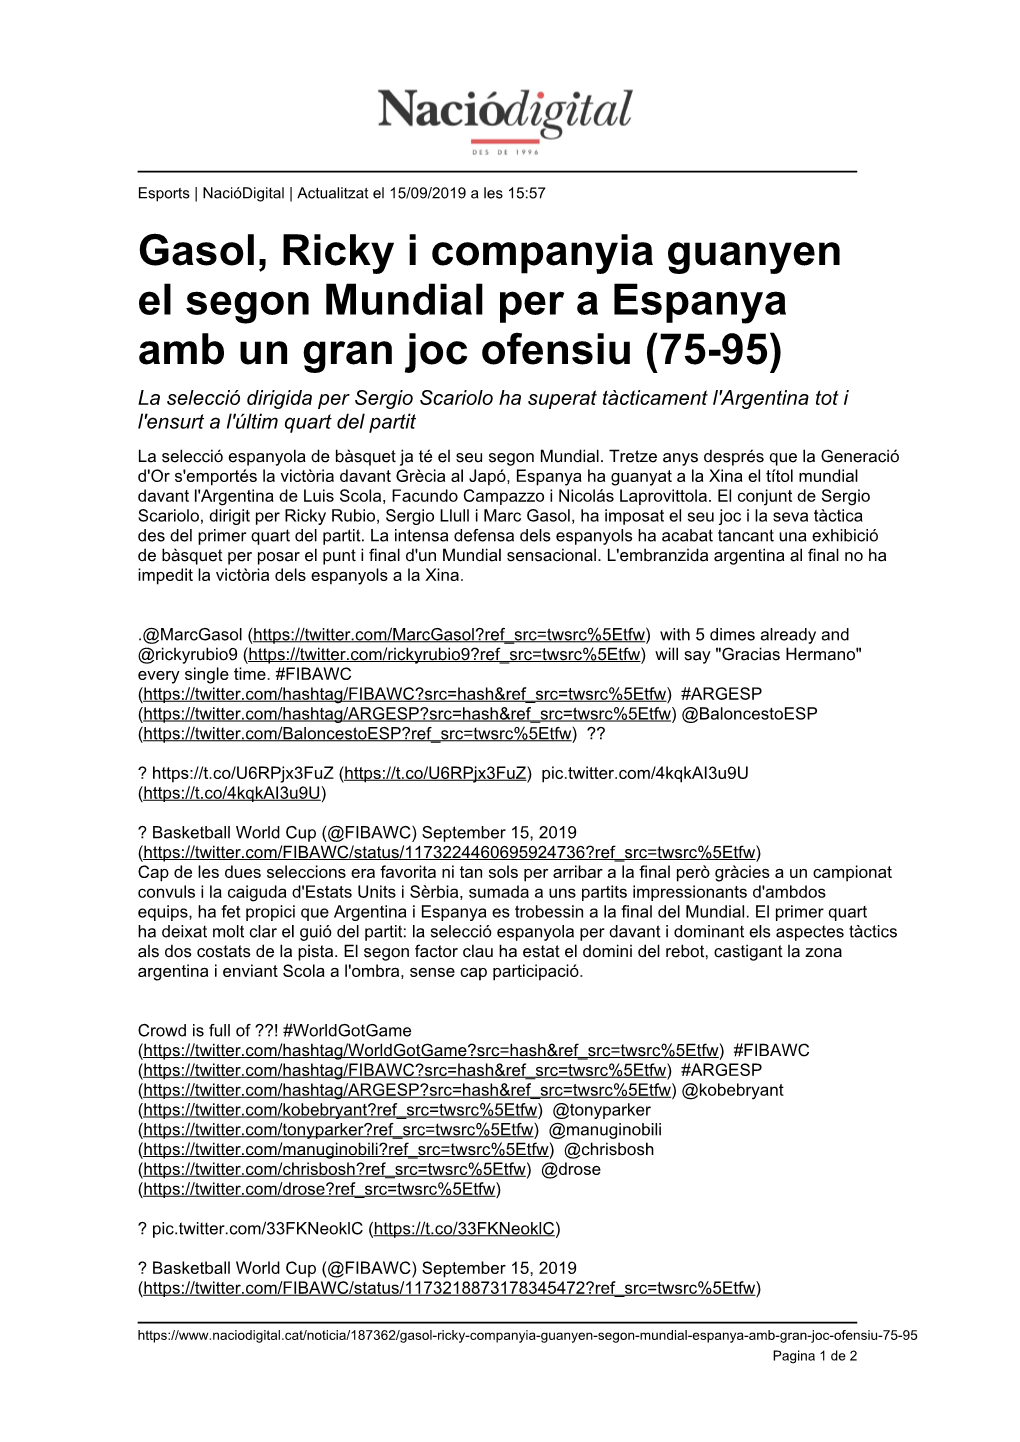 Gasol, Ricky I Companyia Guanyen El Segon Mundial